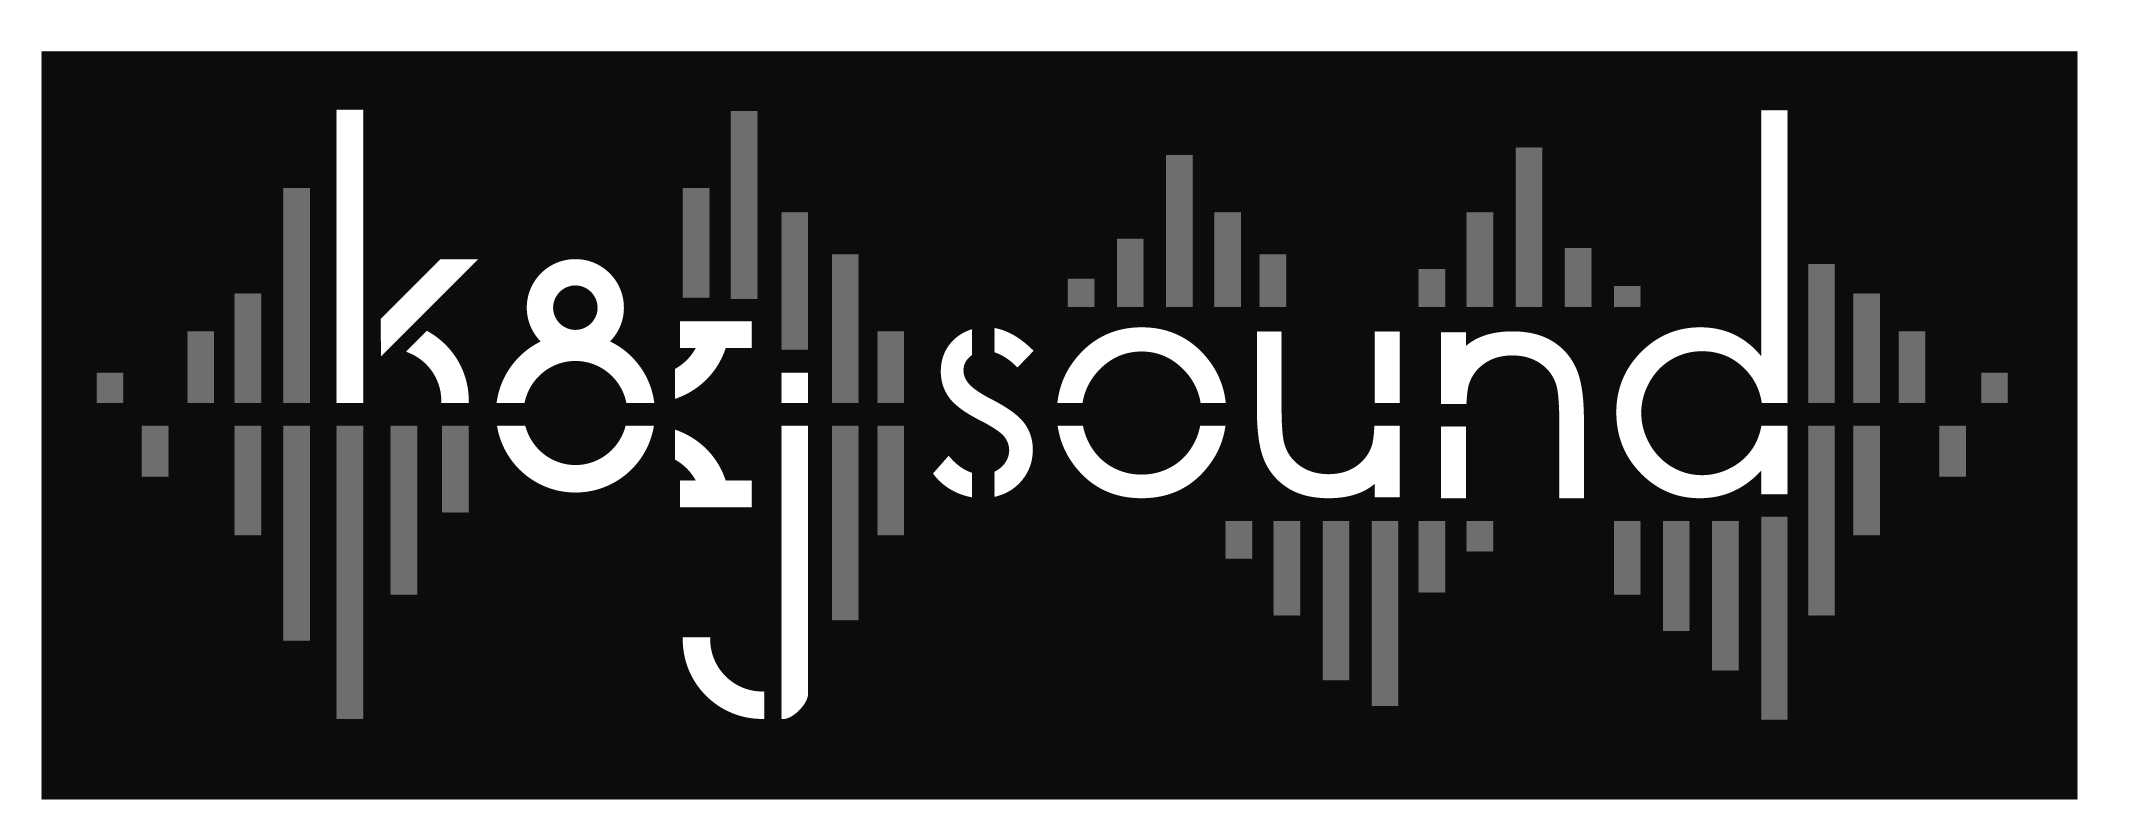 k$j sounds Logo Design - Jasey Crowl Draws